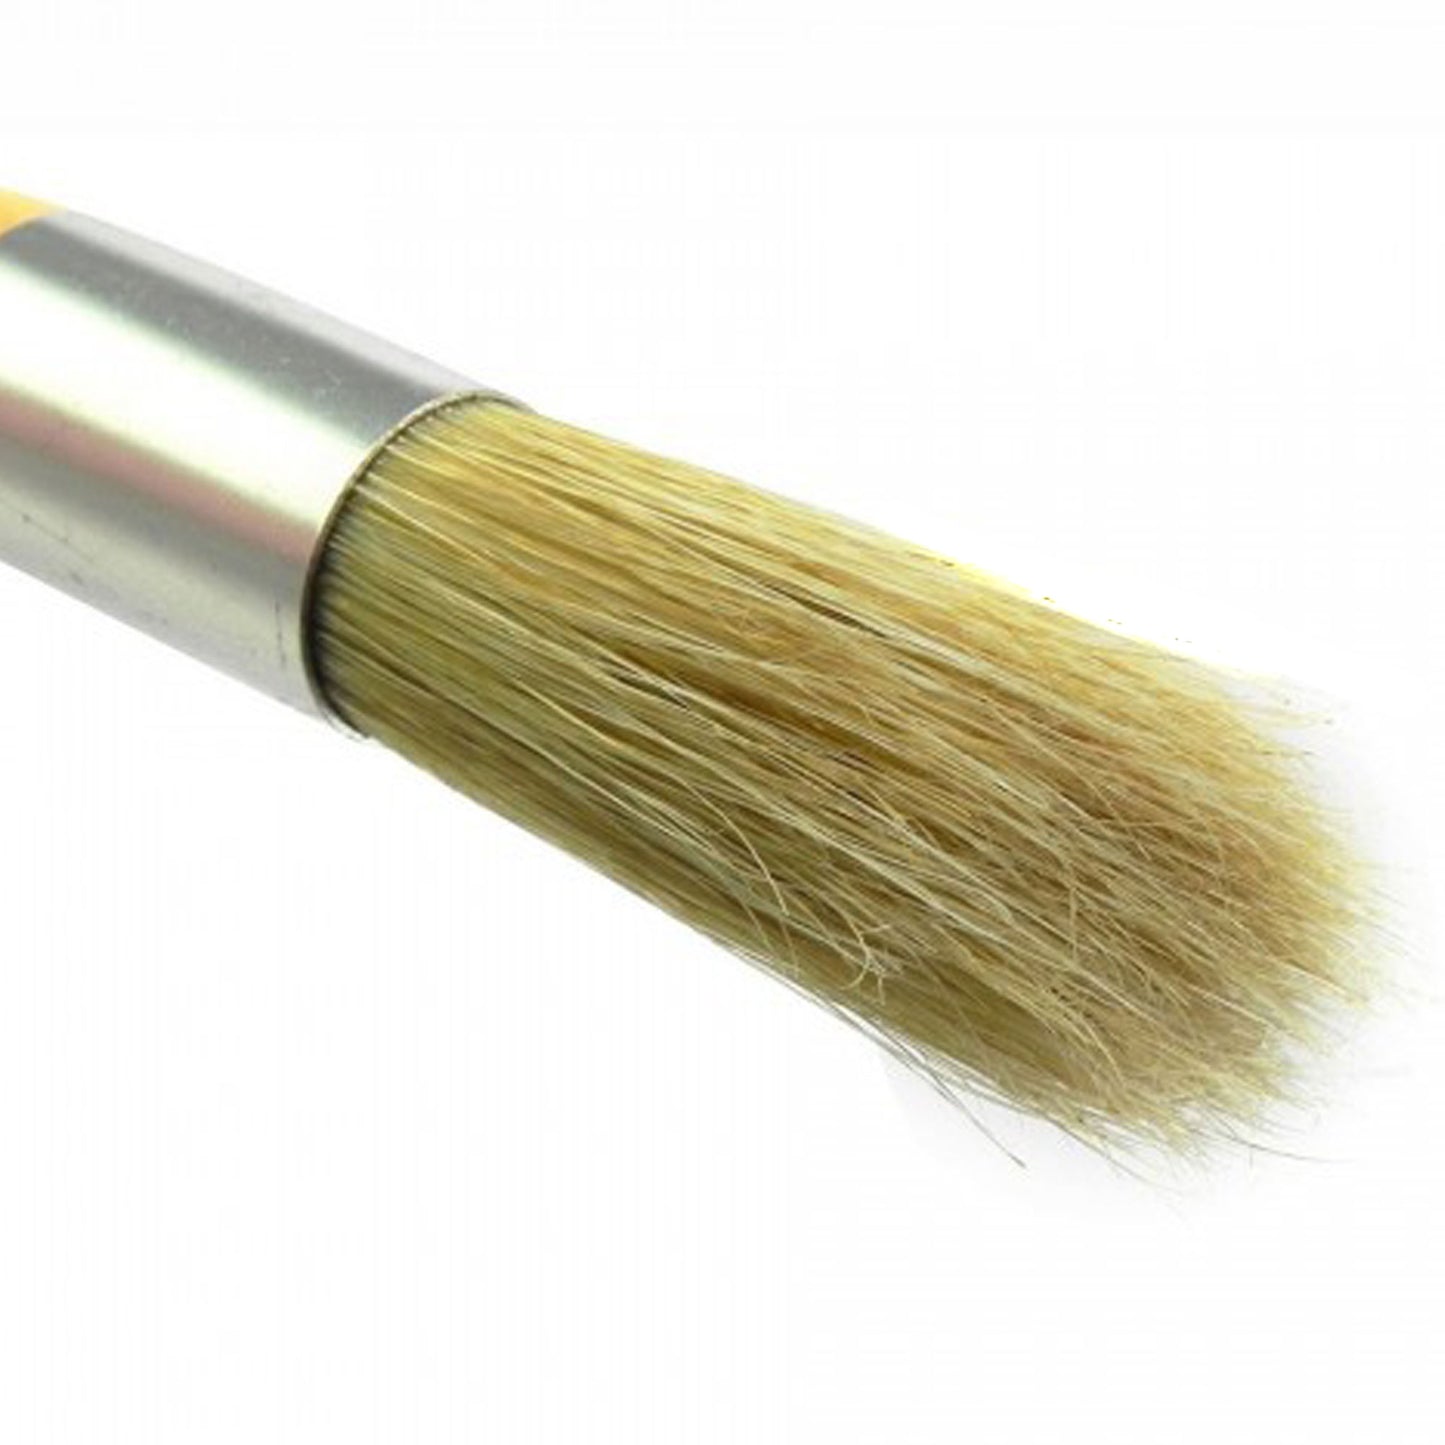 ImportWorx Professional Boar's Hair Detailing Soft Brush 6"